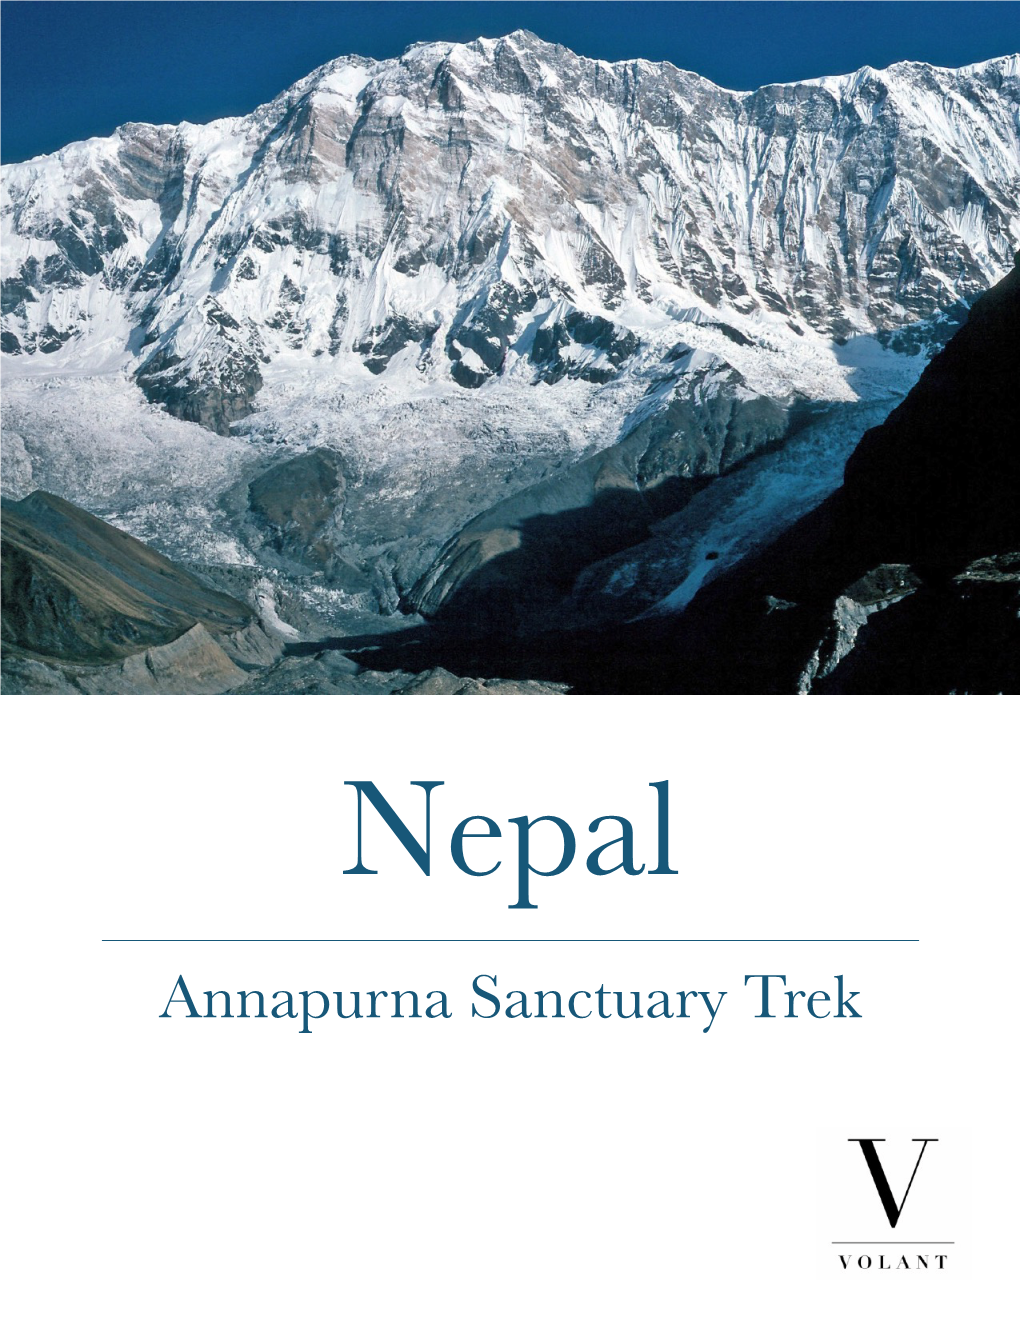 Nepal Annapurna Sanctuary Trek TRIP DETAILS